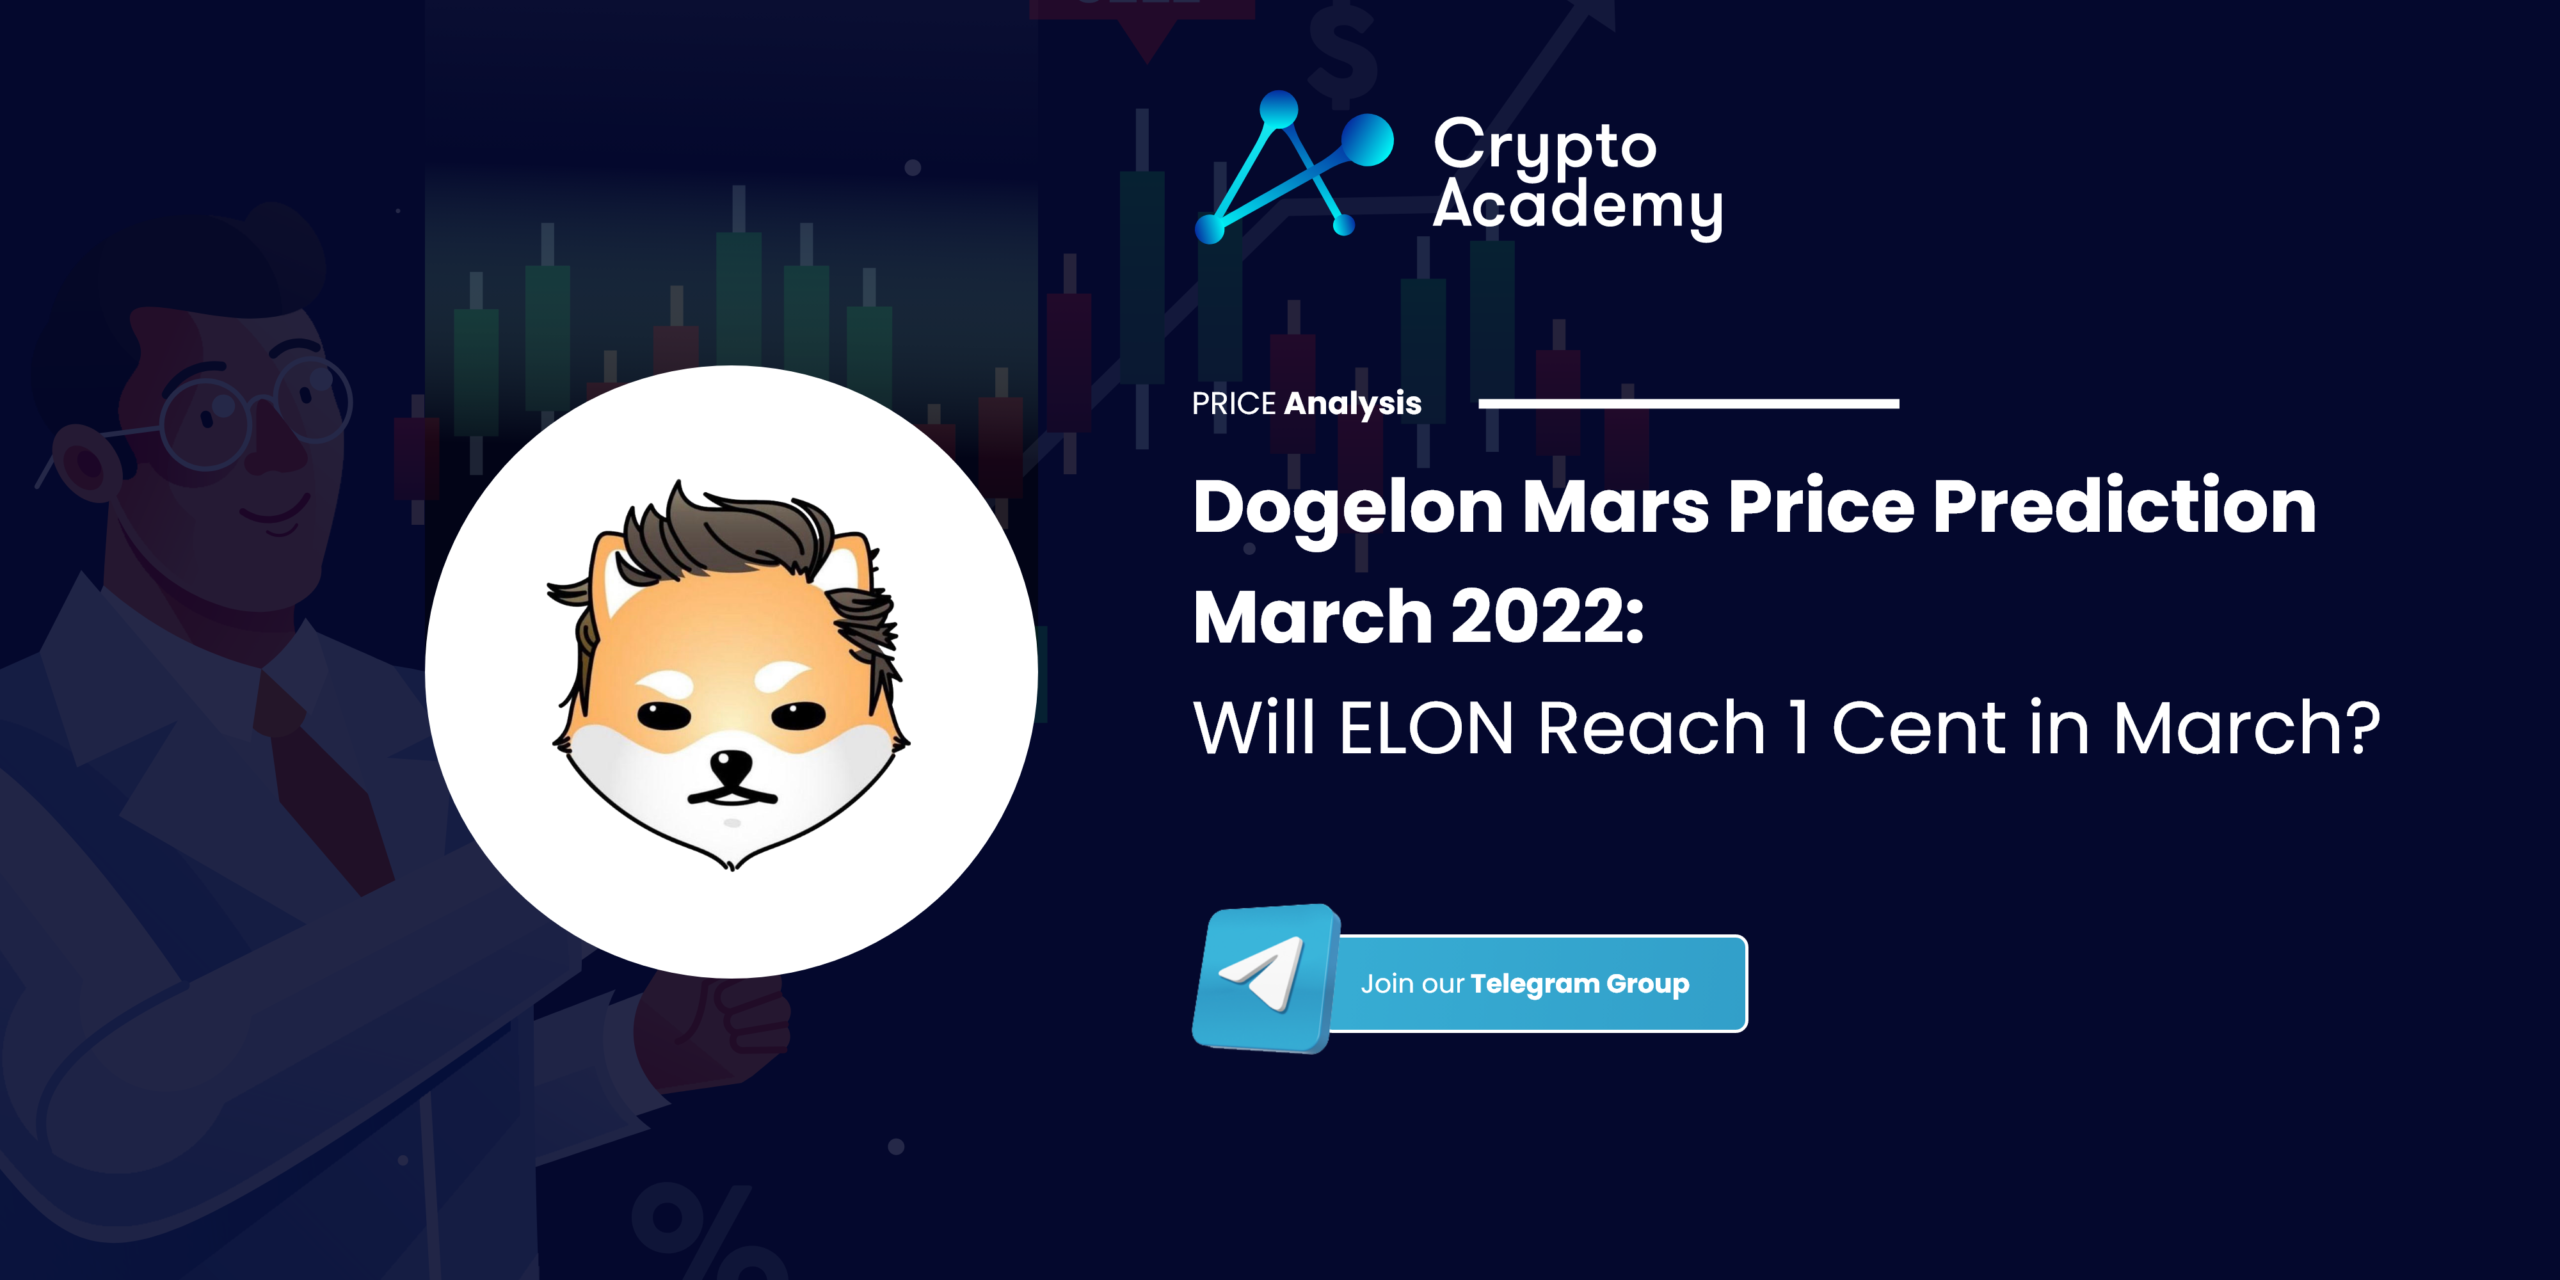 Dogelon Mars Price Prediction March 2022: Will ELON Reach 1 Cent in March?